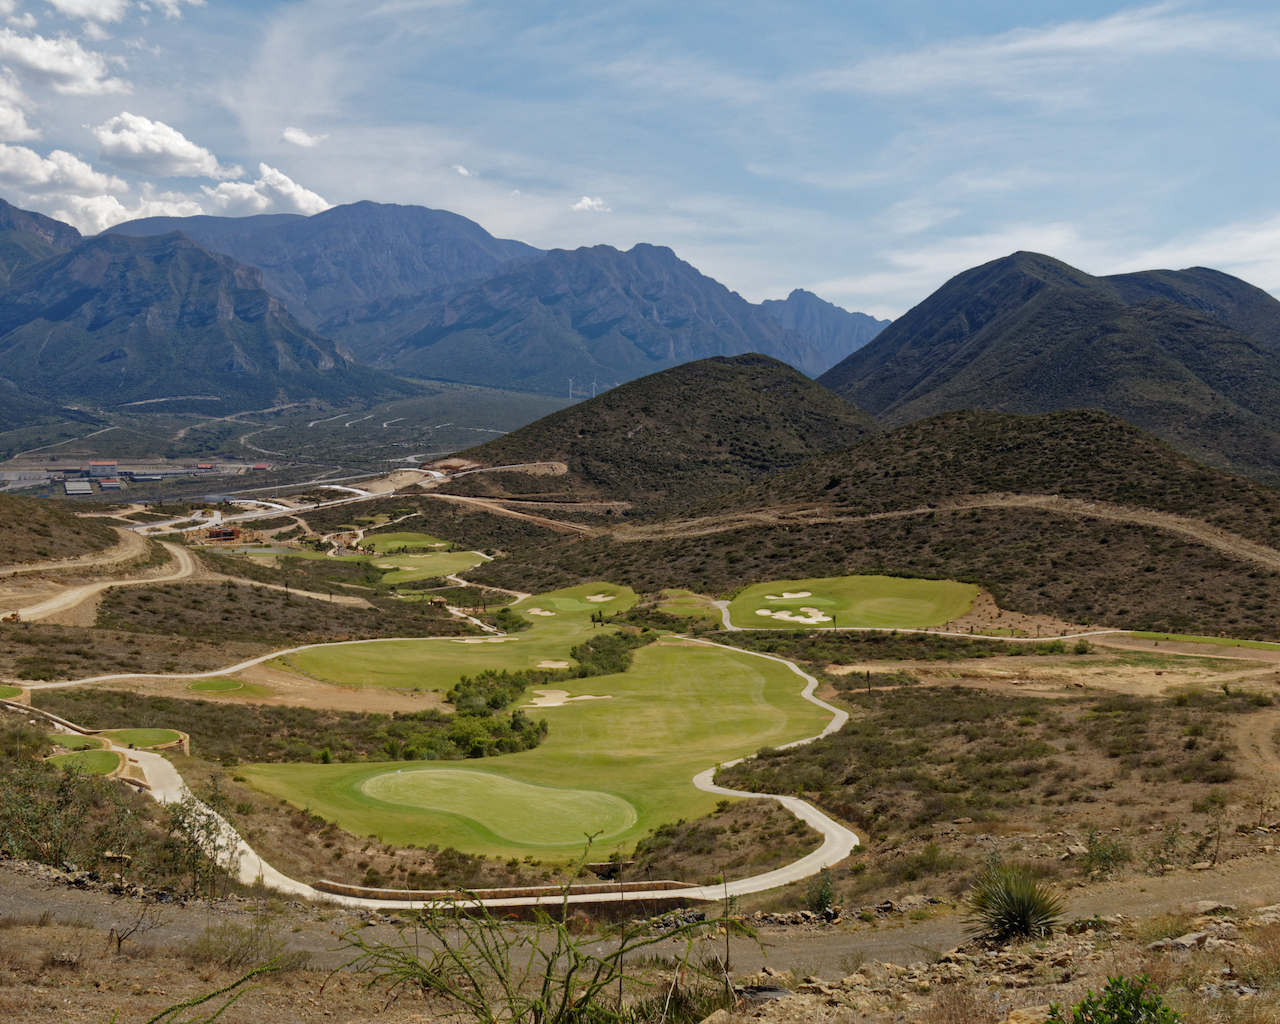 Golf course in Mexico